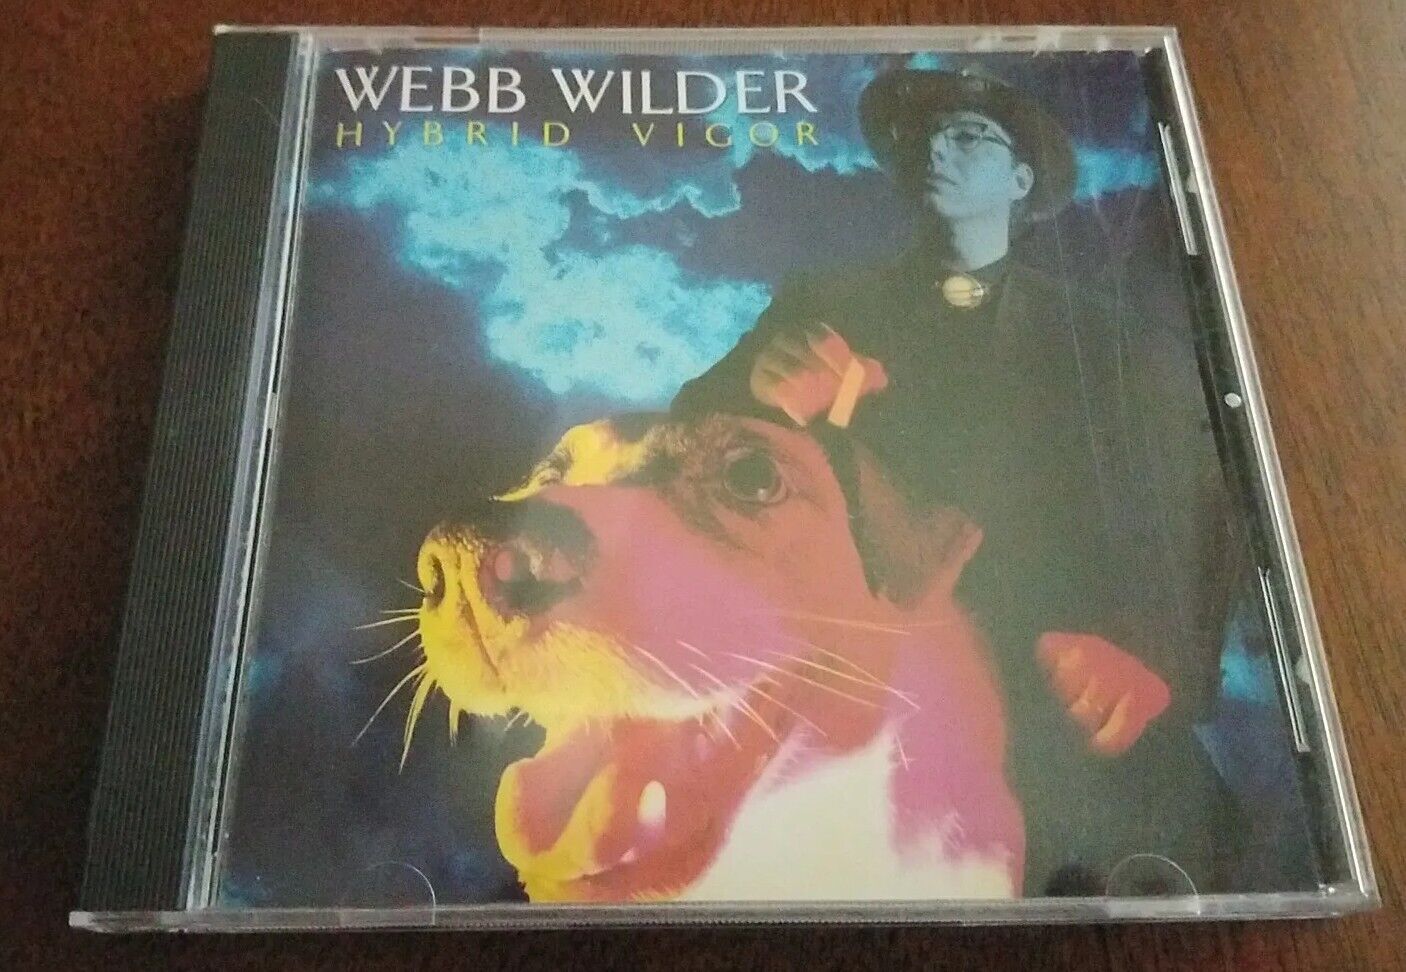 Webb Wilder: Hybrid Vigor CD Album Island Records Vintage 1989